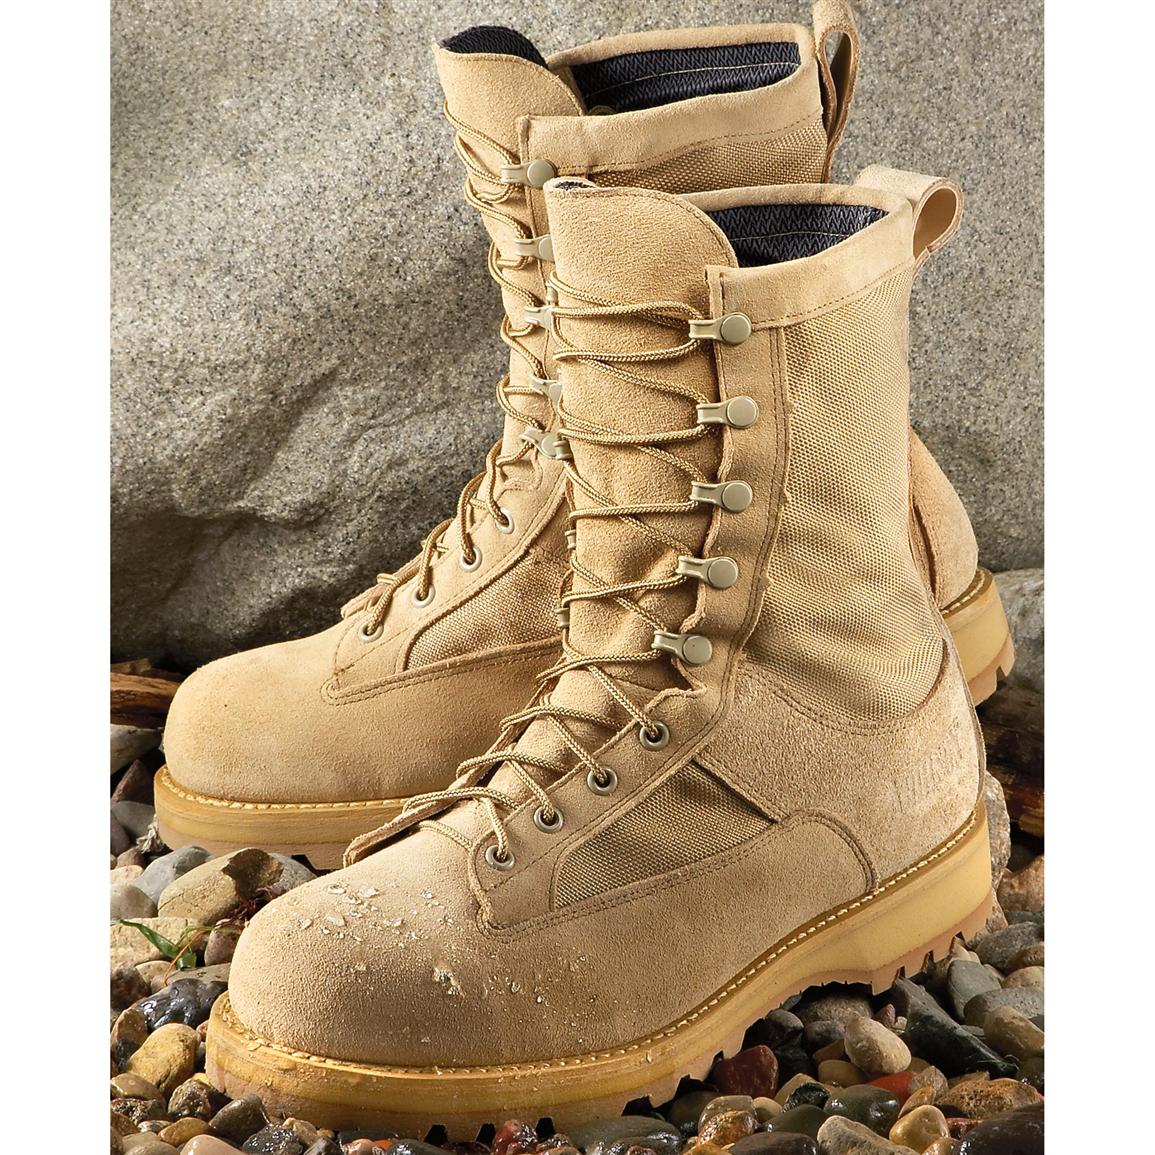 Top Military Boot Brands - Best Design Idea